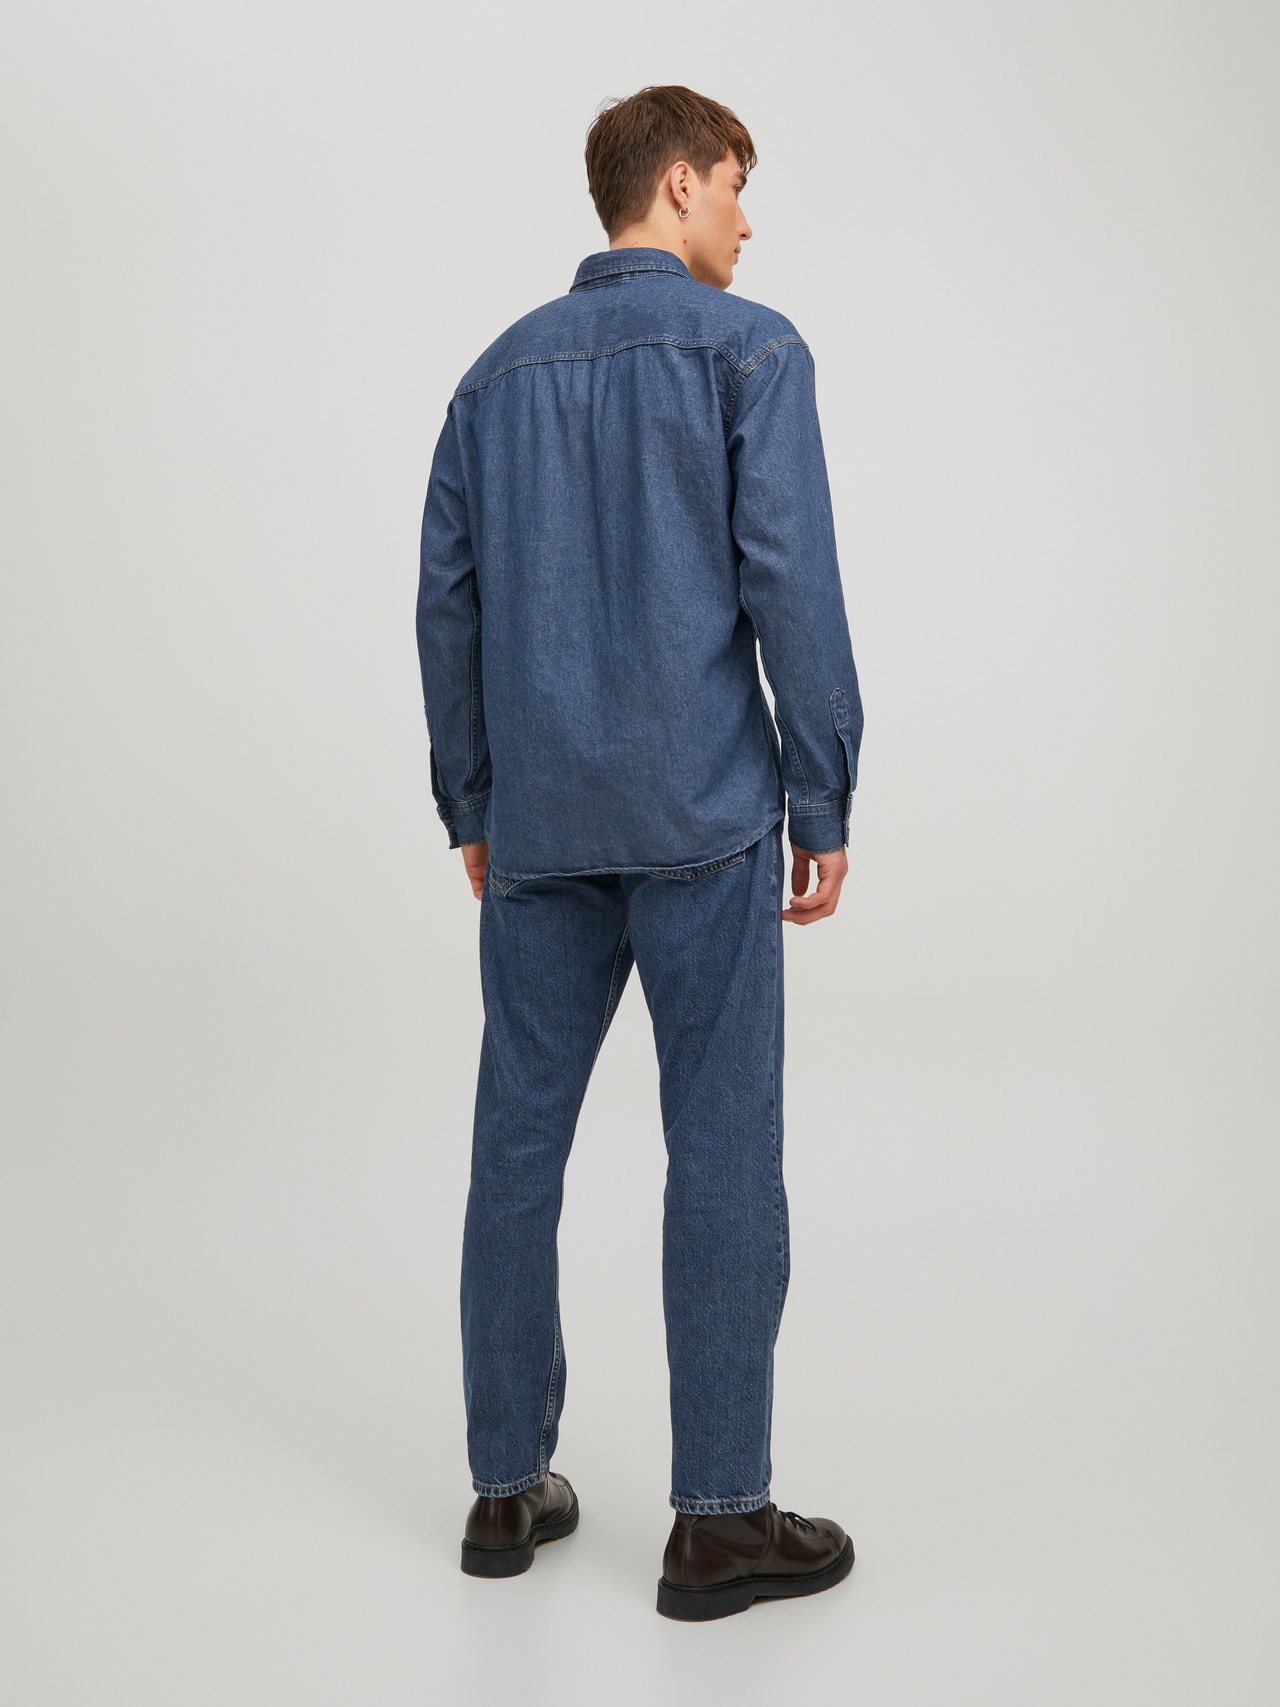 Jack & Jones Camisa Casual Regular Fit -Dark Blue Denim - 12217980